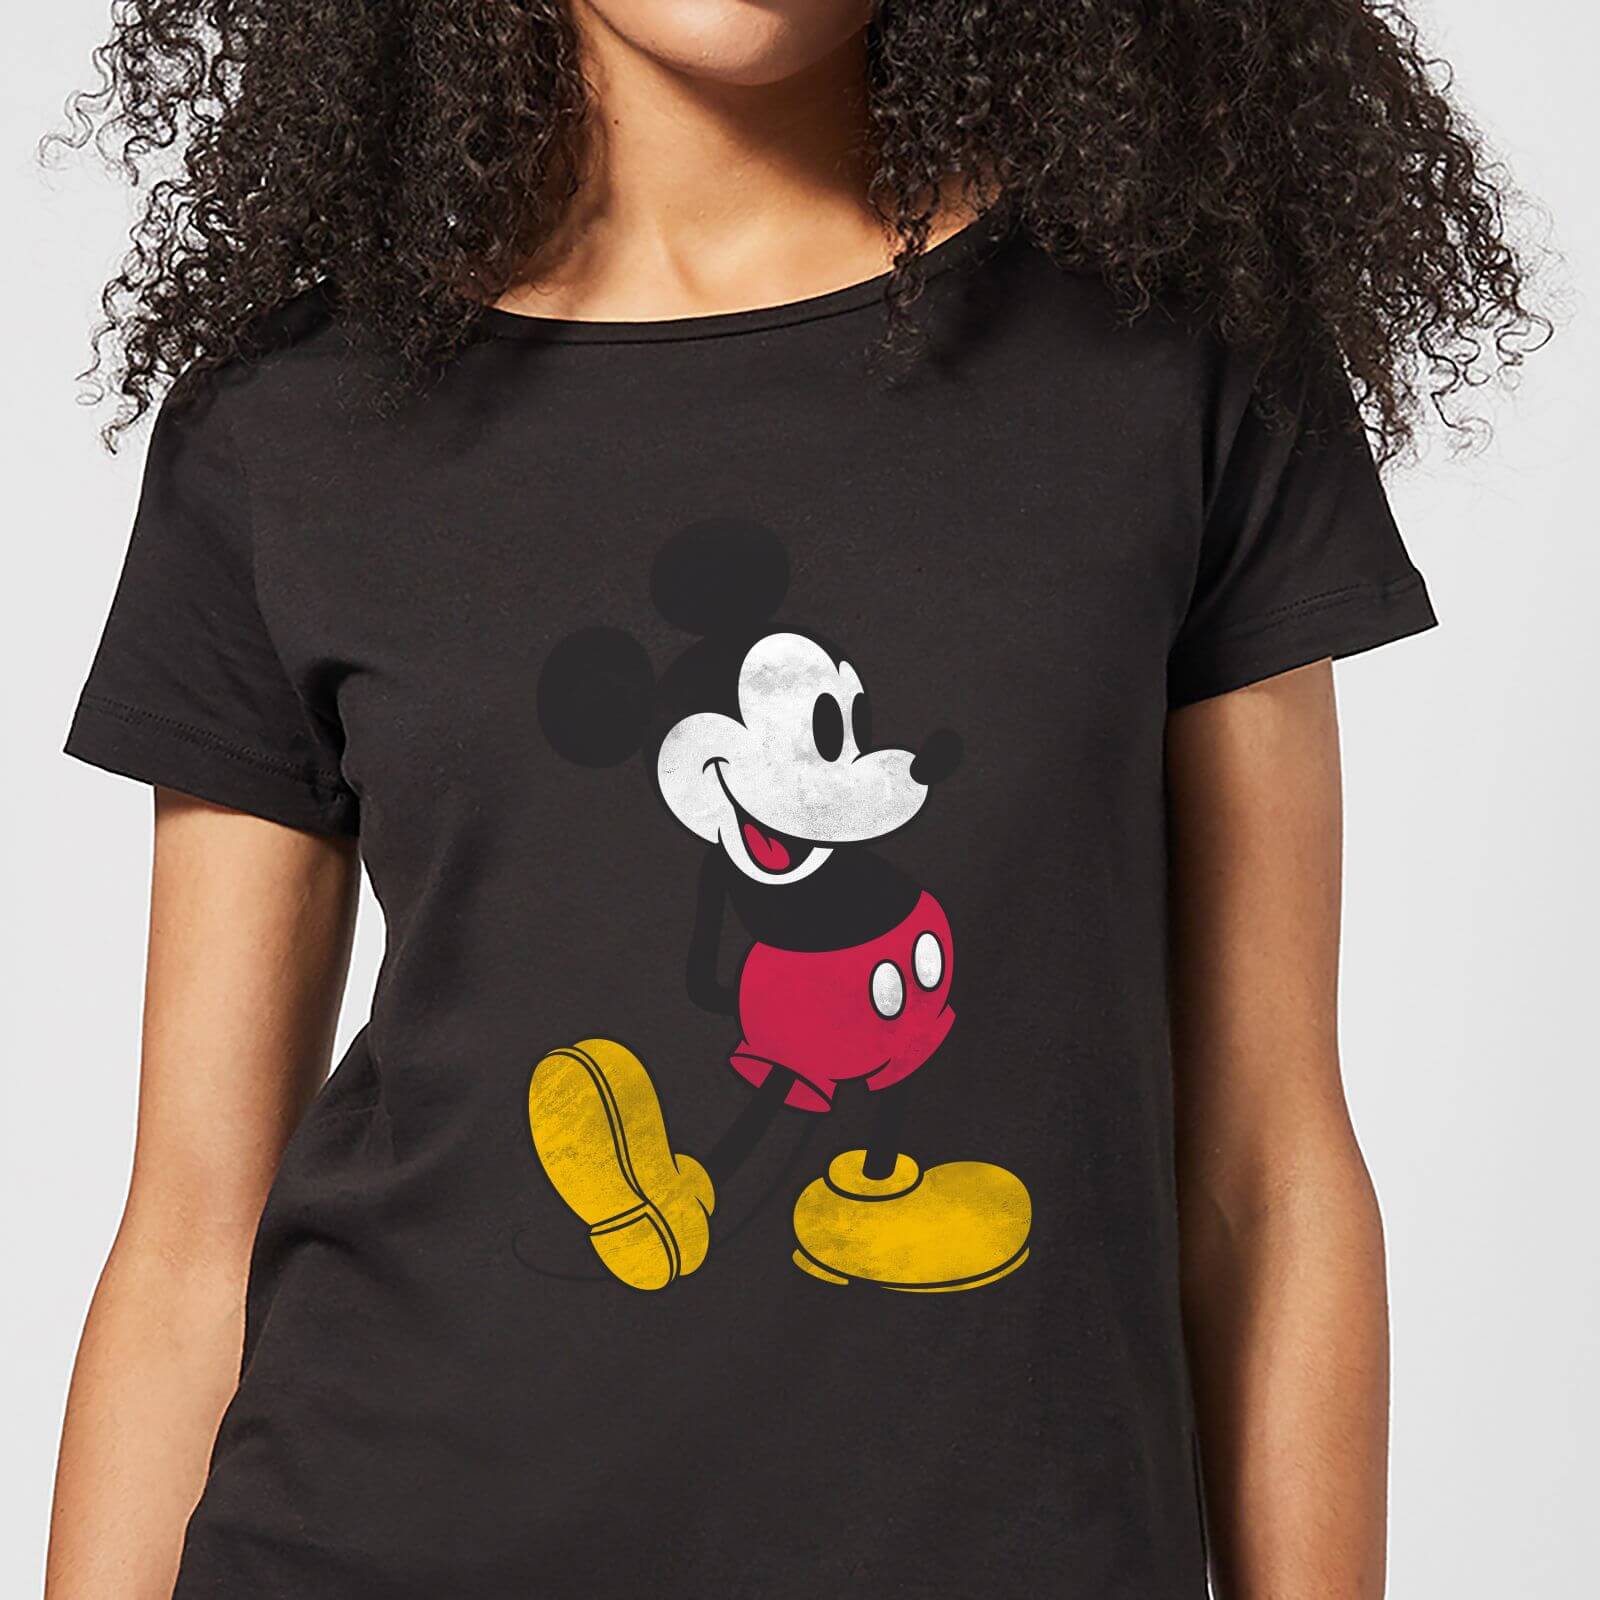 Minnie and Mickey Mouse Love Cartoon T-shirt Tshirt Oversized Gift T shirt S-M-L-XL-XXL-3XL-4XL-5XL Vest Tank Top Men Women Unisex 3817